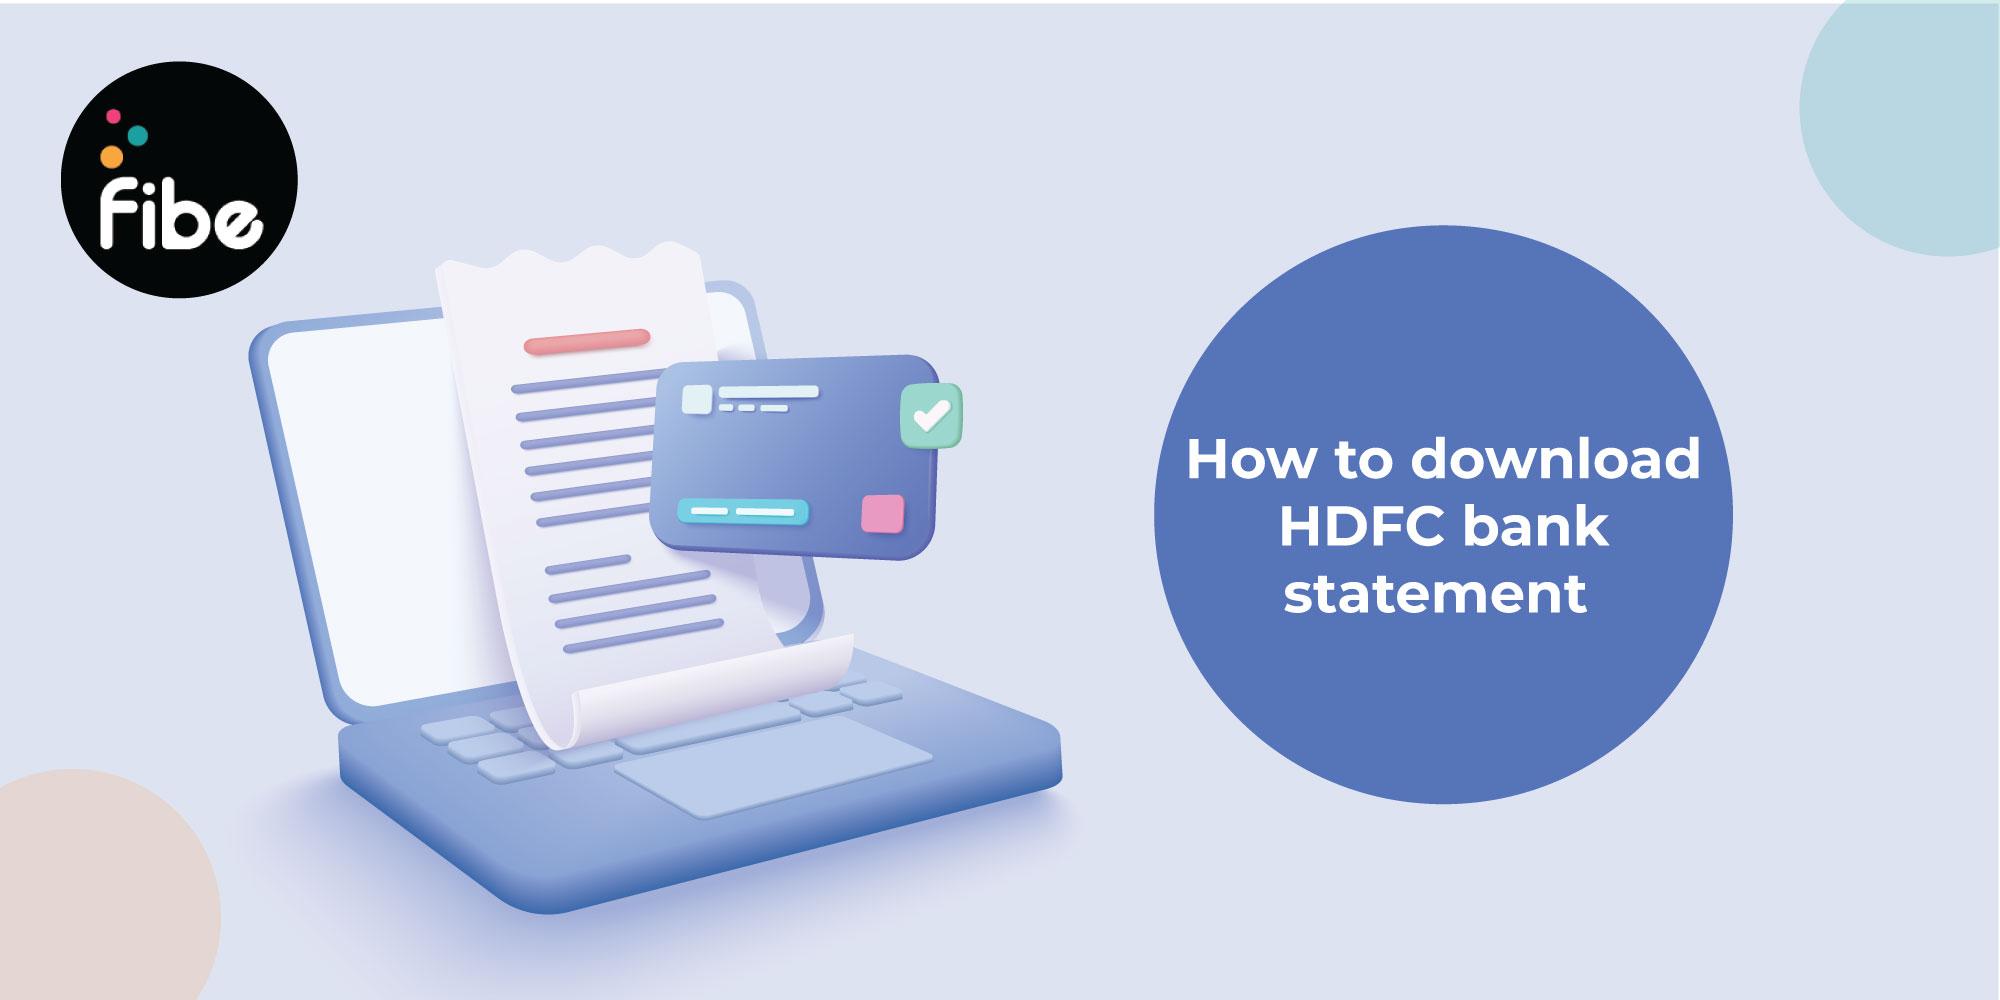 HDFC Bank Statement: Download it easily online or offline